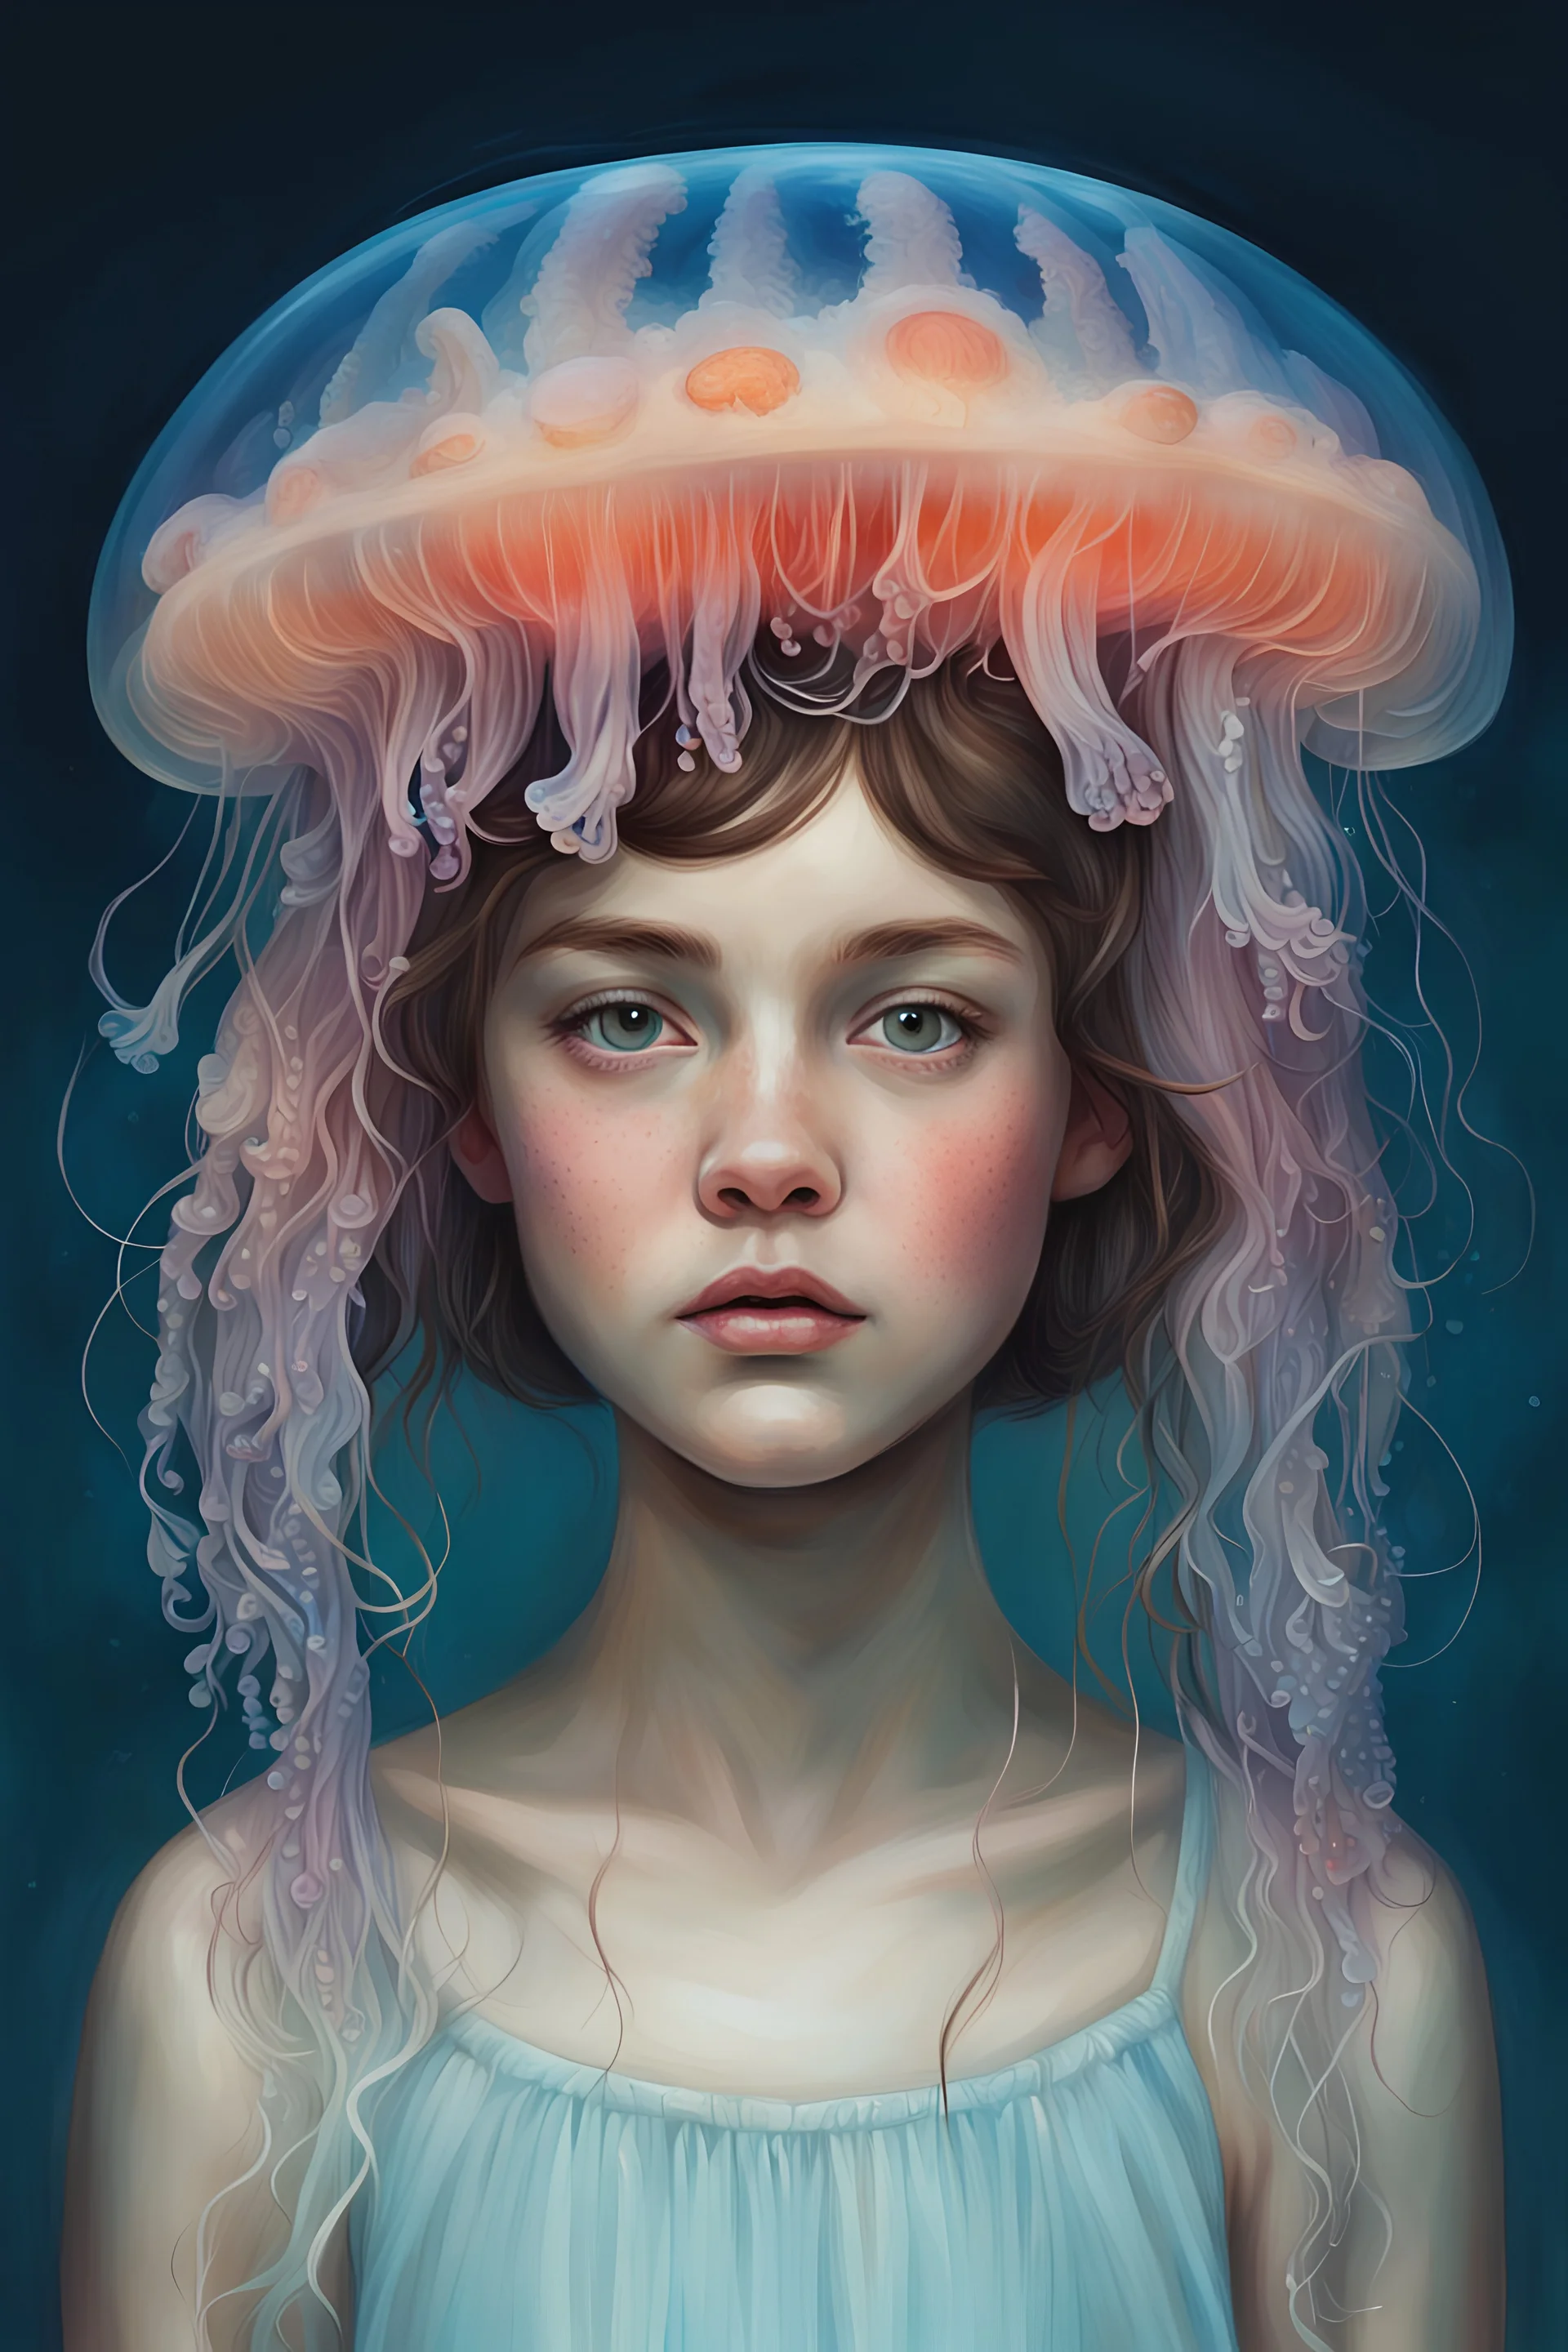 портрет девушки с медузой на голове, по плечи